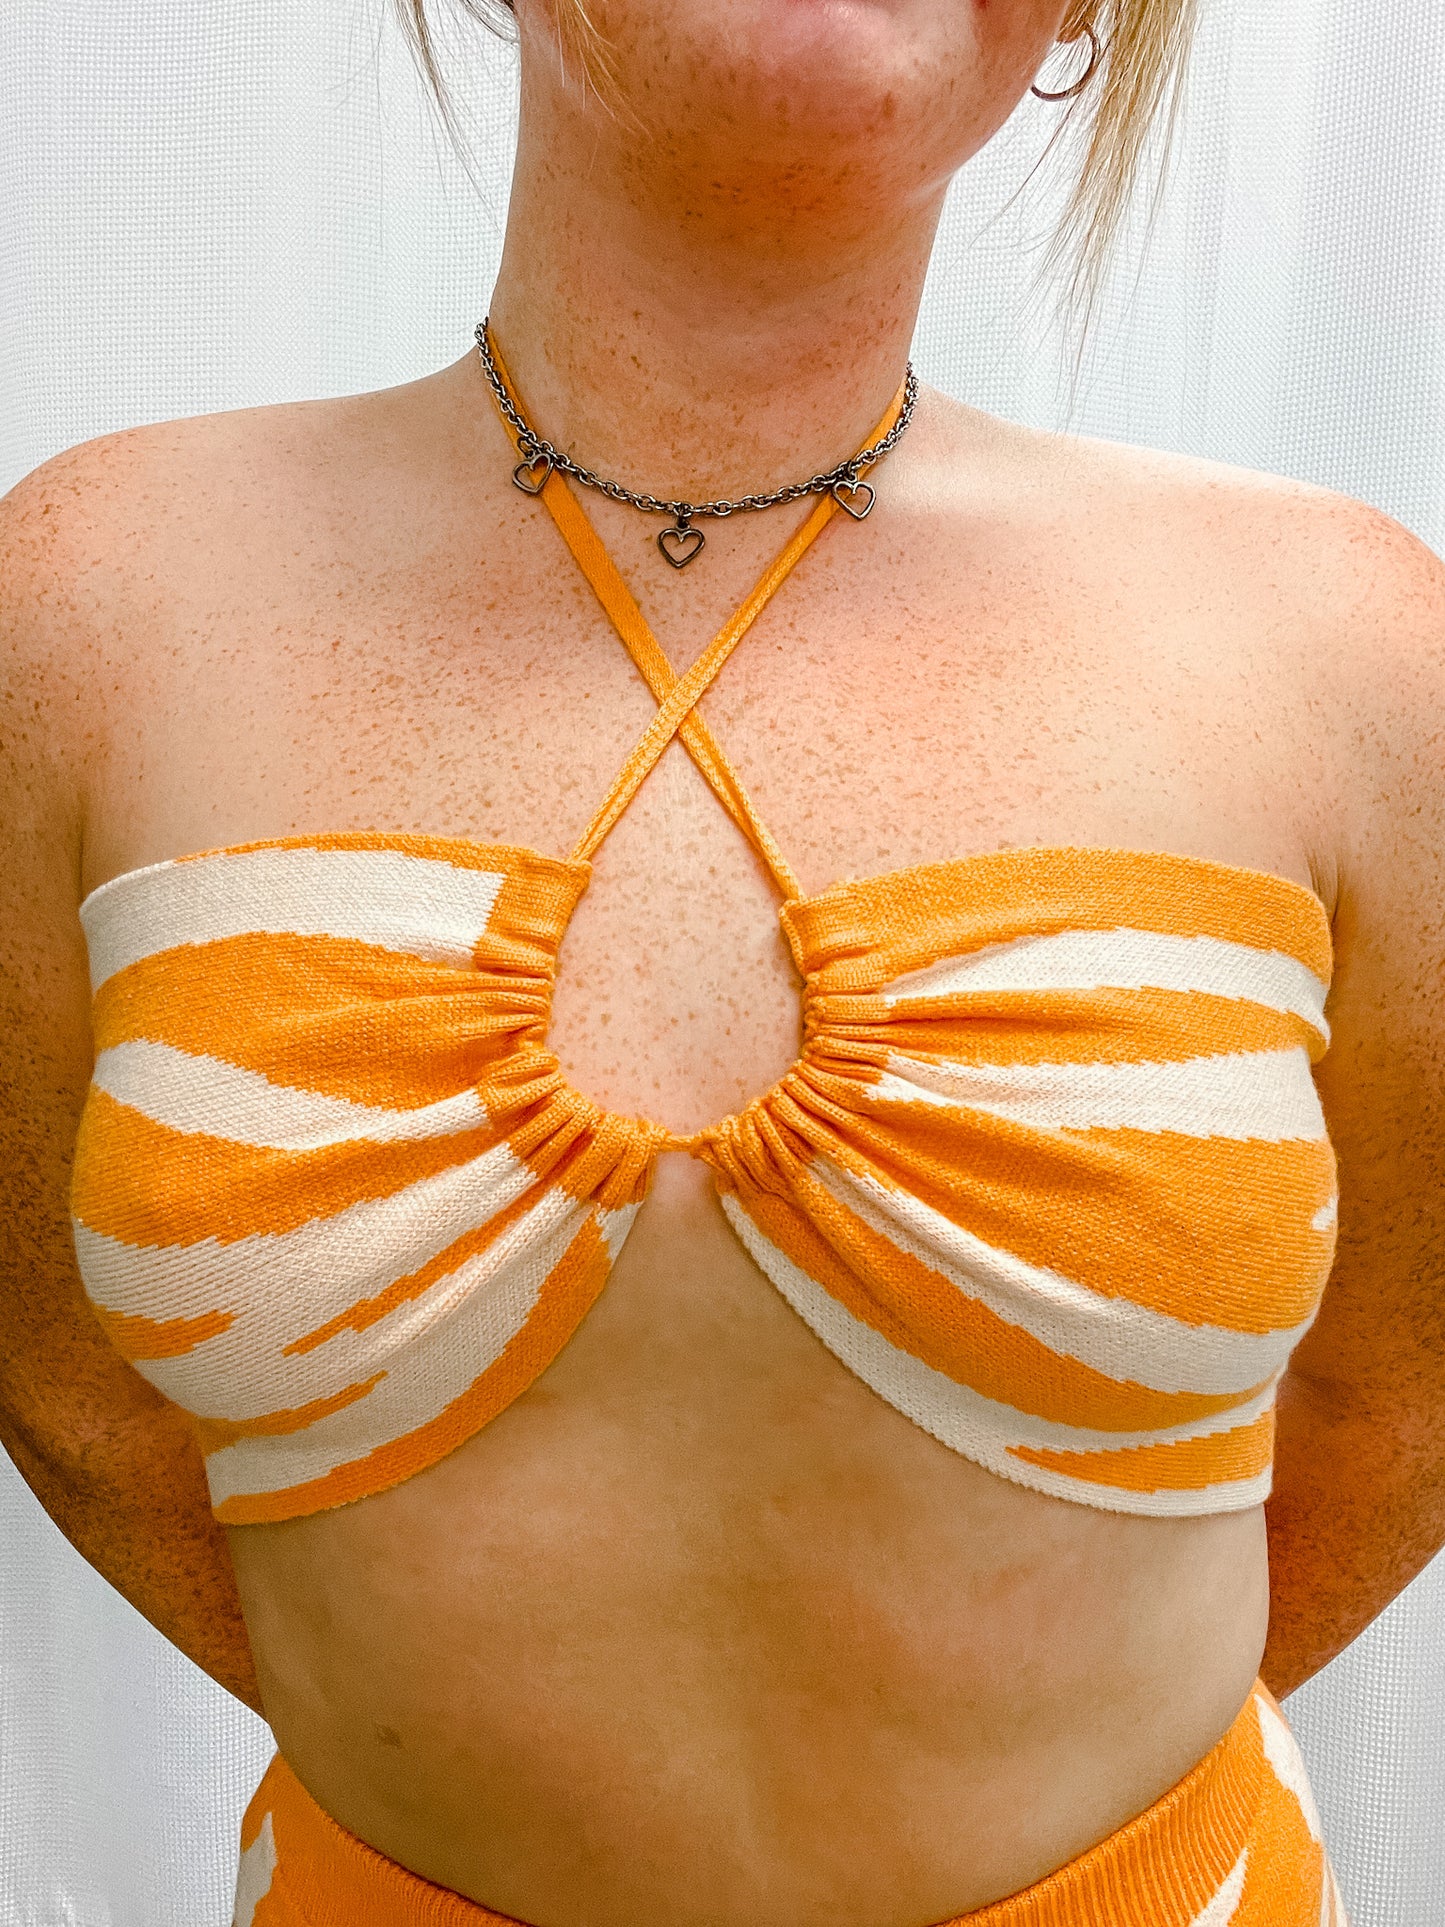 Tiger Striped Crop and Short Set - Orange/White